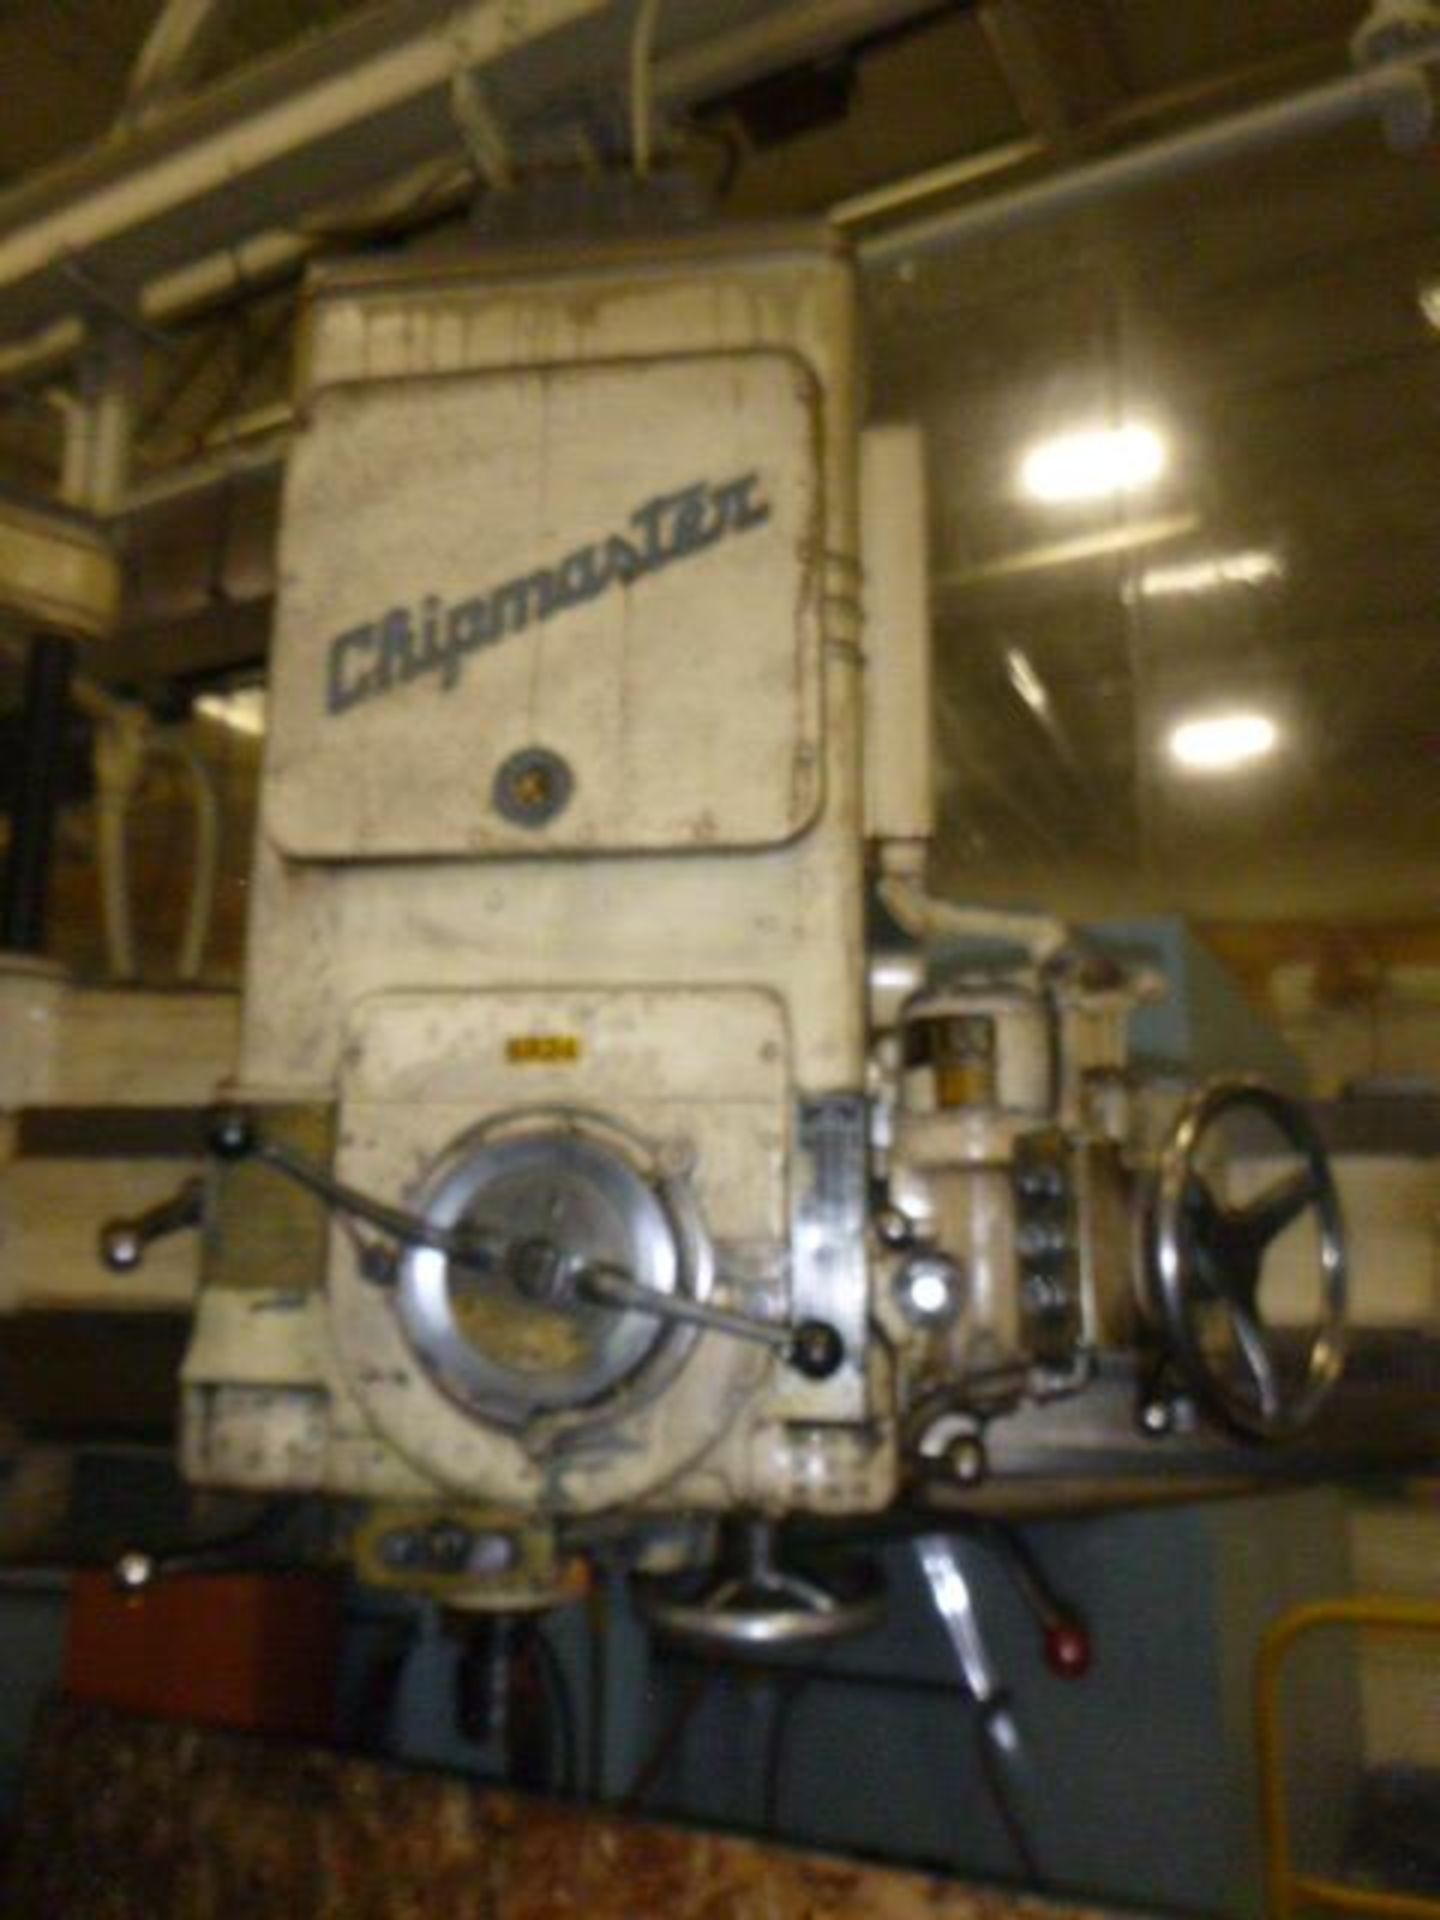 5' x 13" Giddings & Lewis Chipmaster Radial Drilling Machine - Image 3 of 4